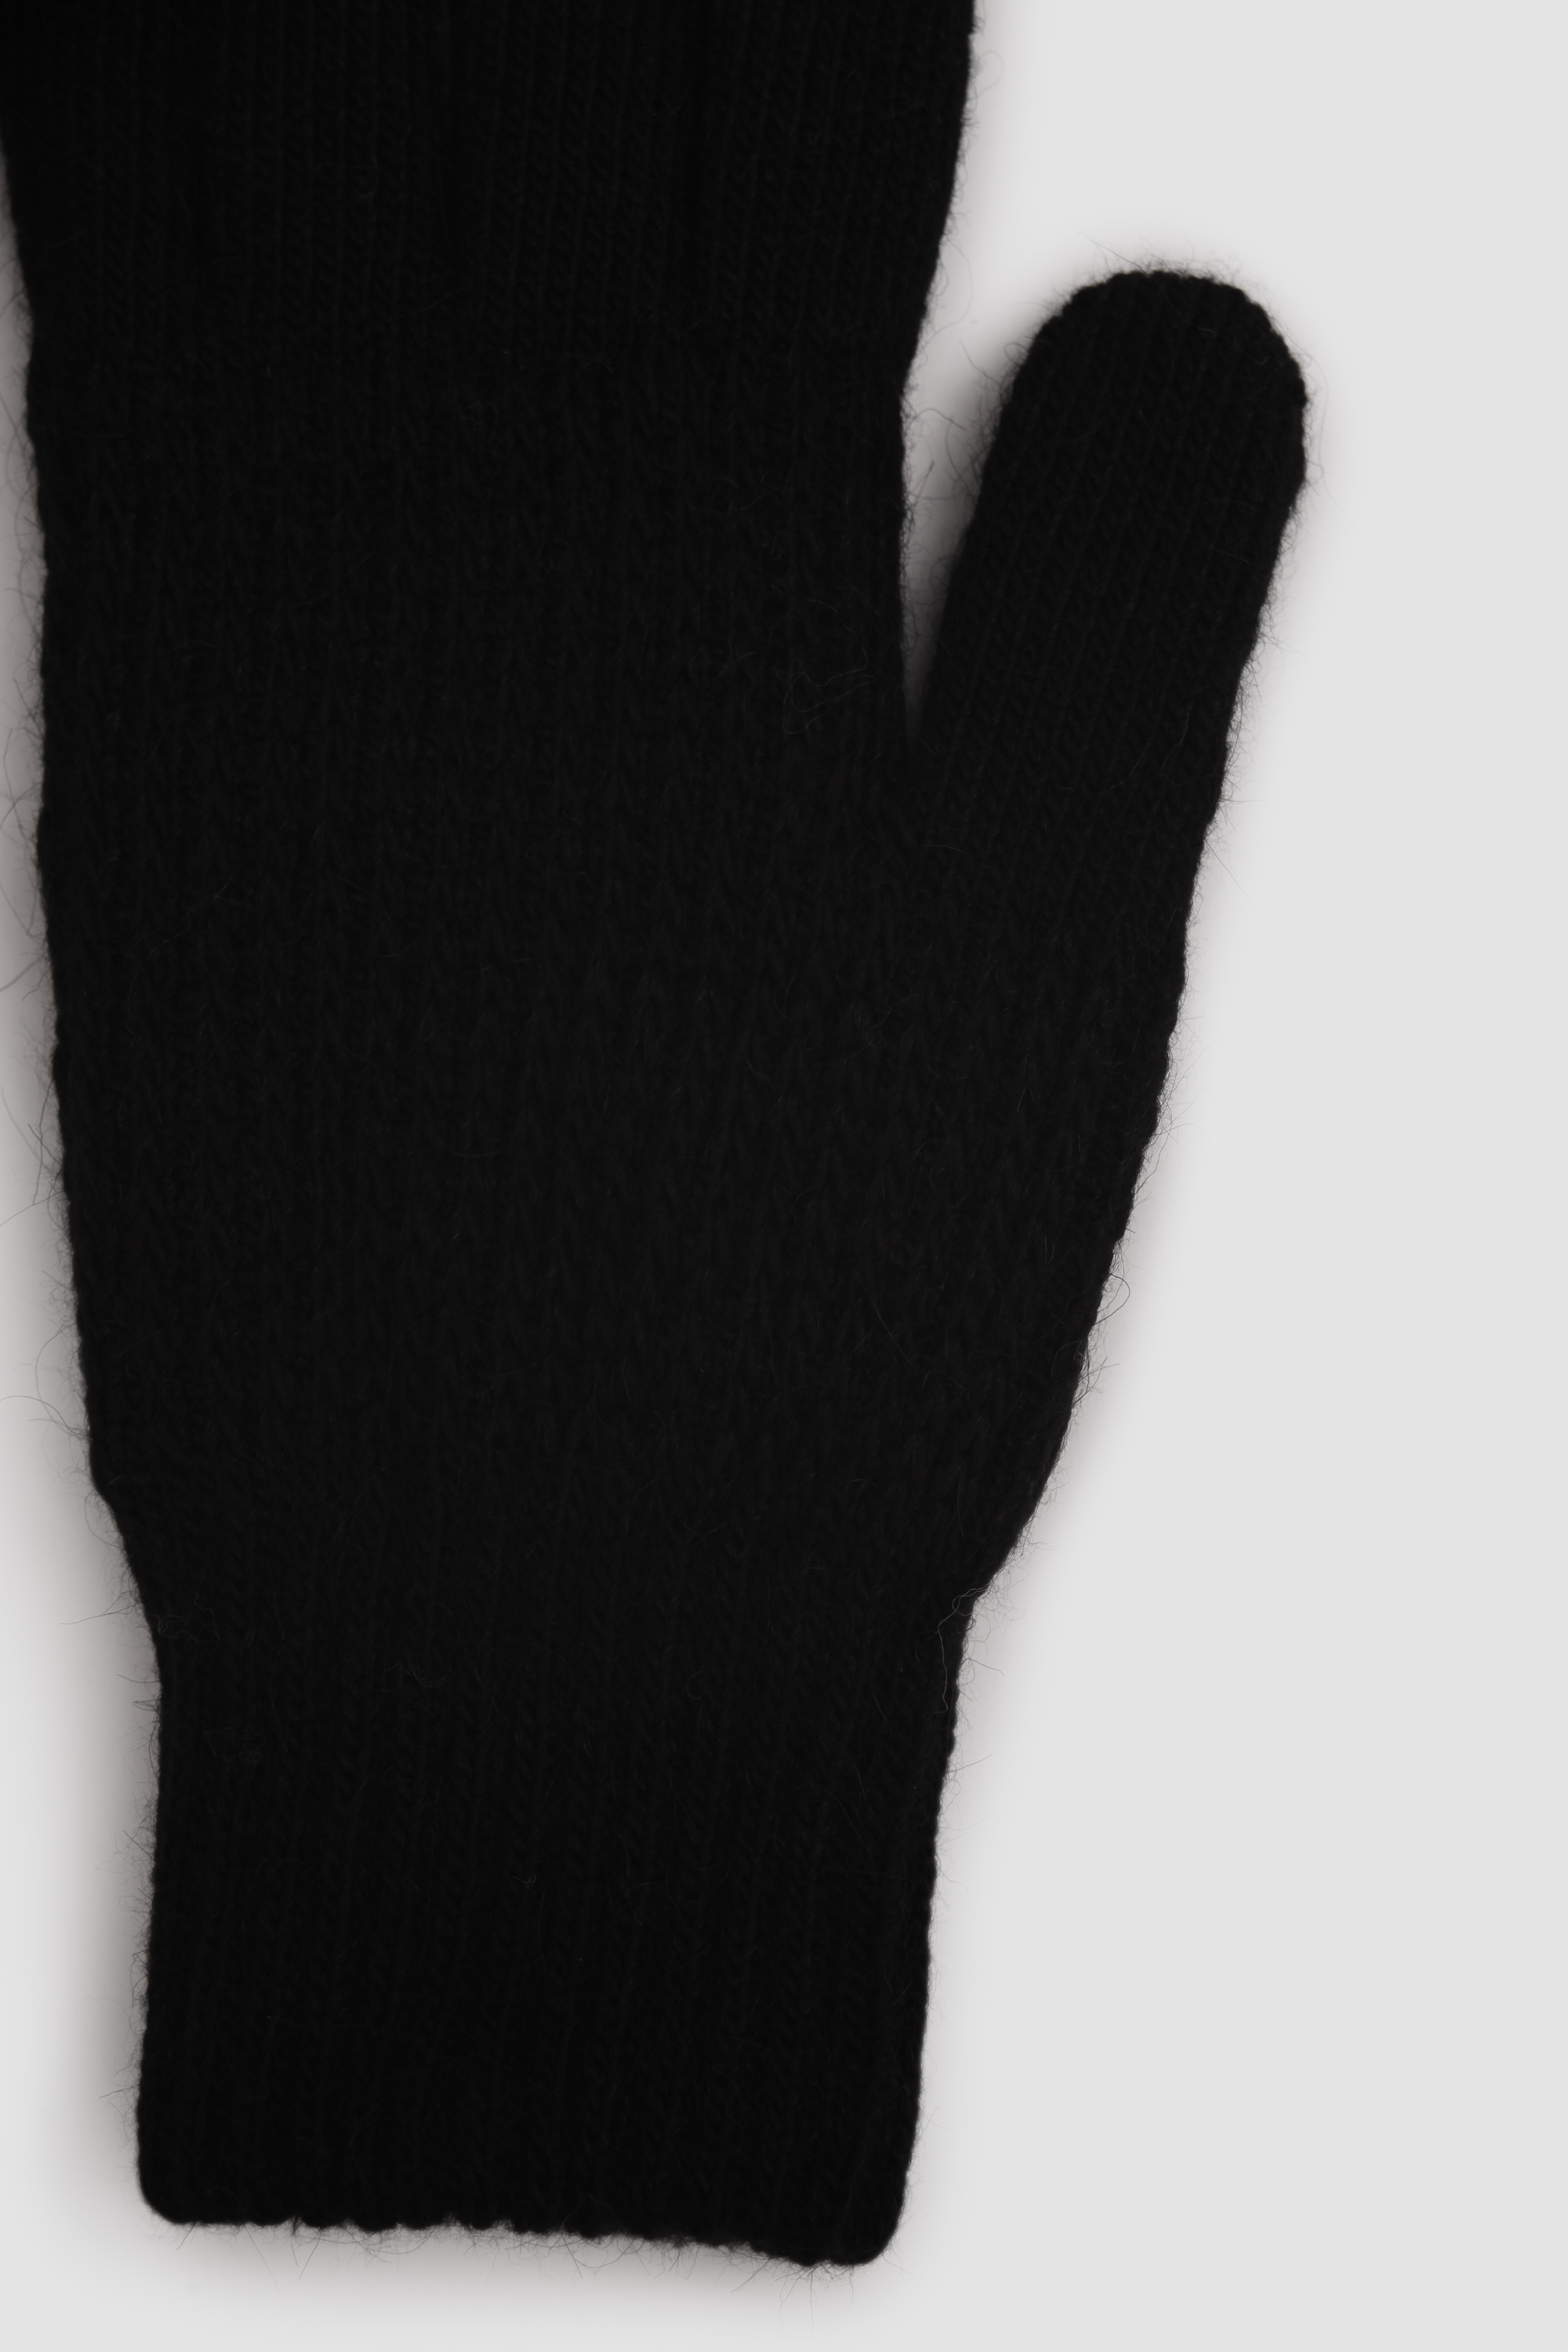 Перчатки (арт. baon B361509), размер Без/раз, цвет черный Перчатки (арт. baon B361509) - фото 2